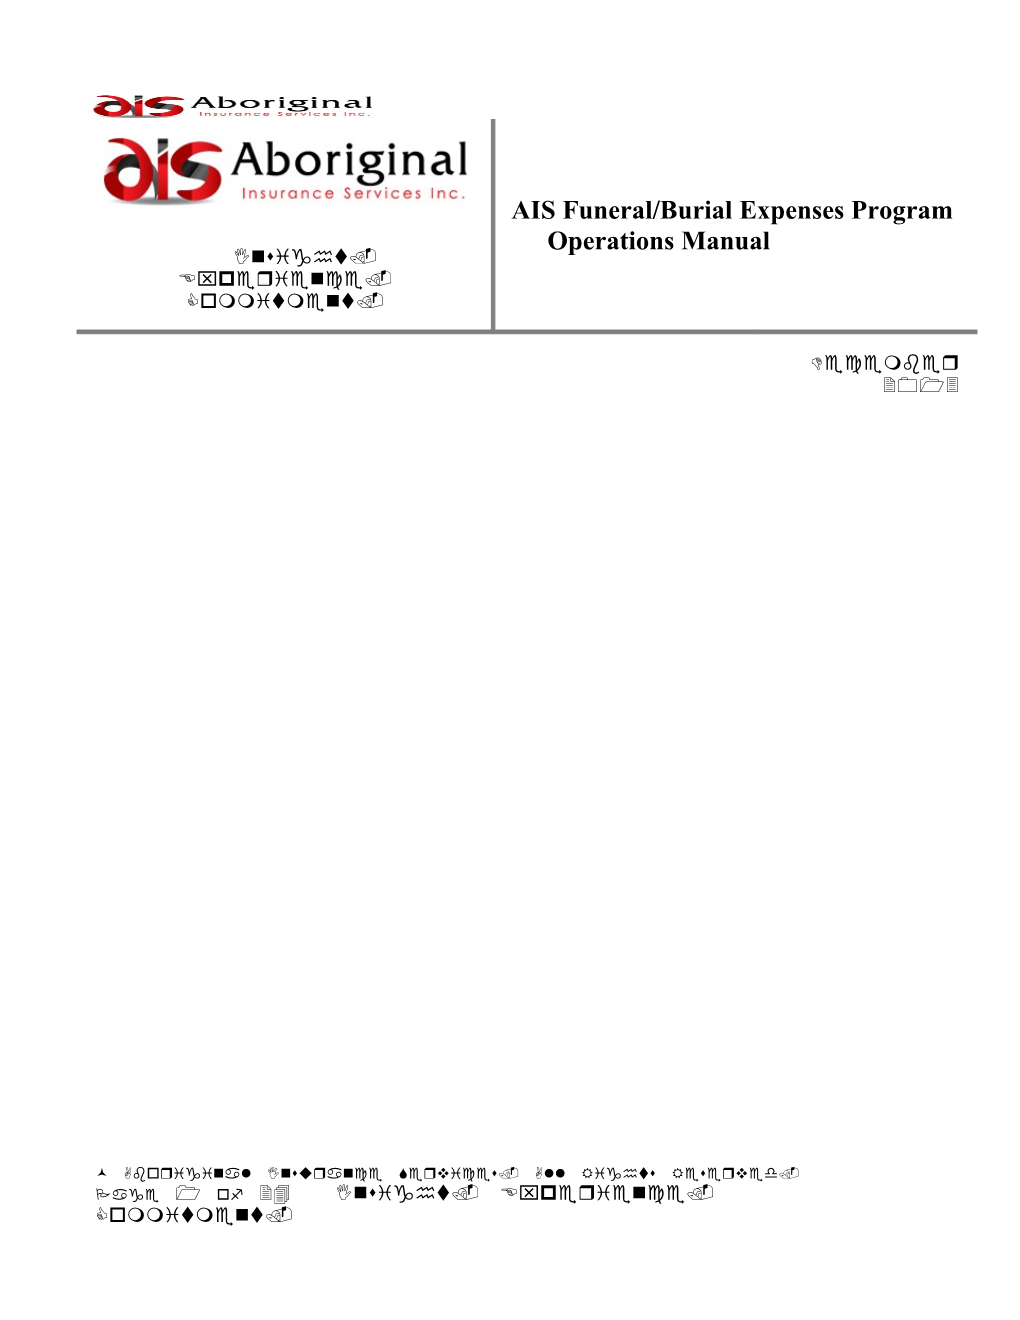 AIS Funeral/Burial Expenses Programoperations Manual